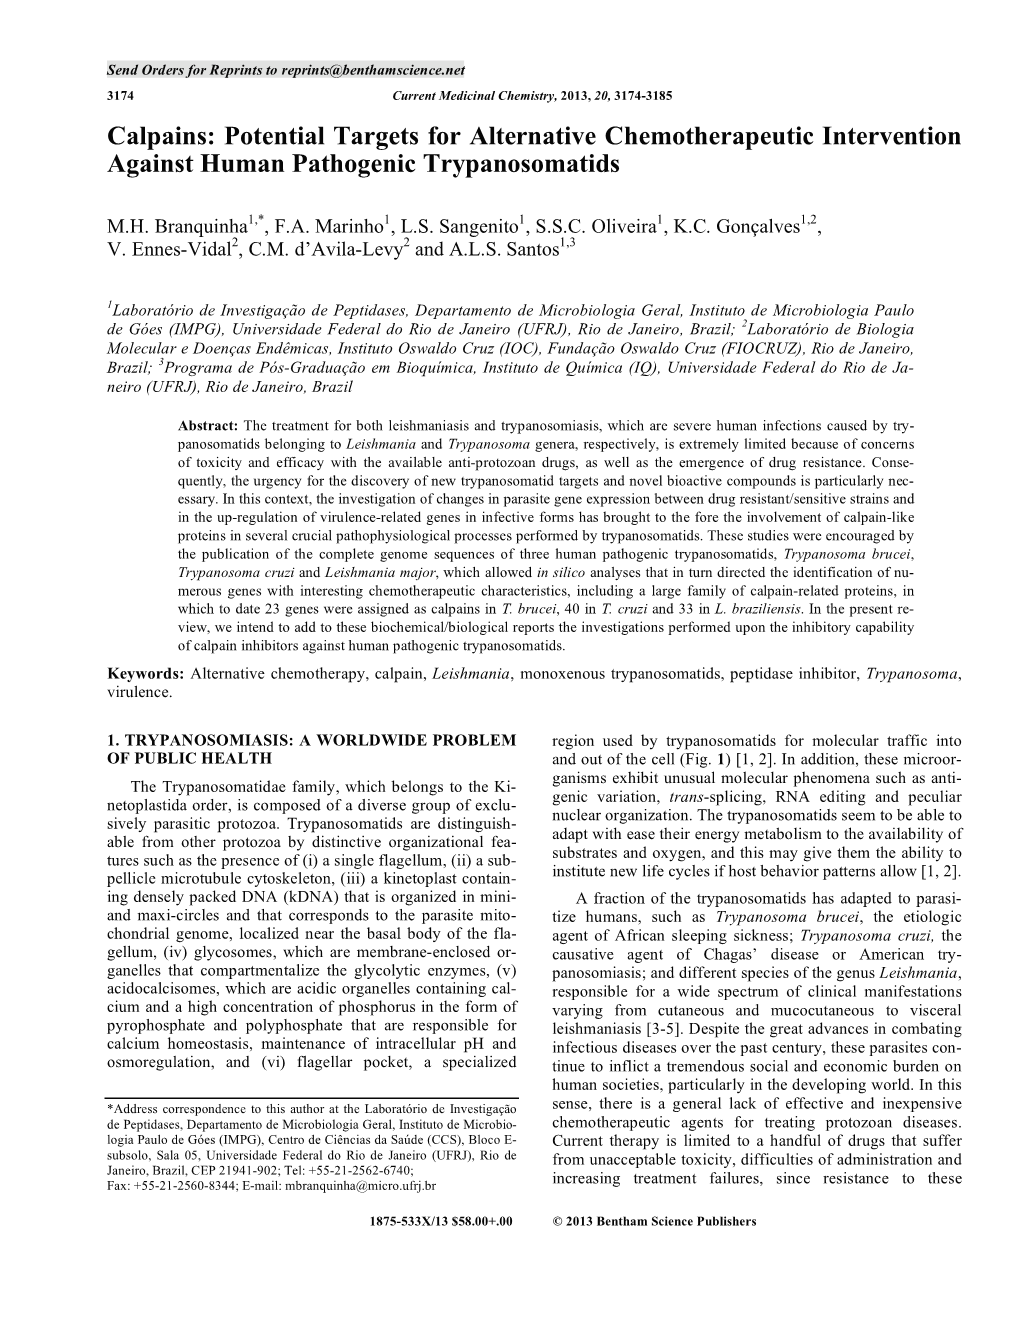 Calpains: Potential Targets for Alternative Chemotherapeutic Intervention Against Human Pathogenic Trypanosomatids